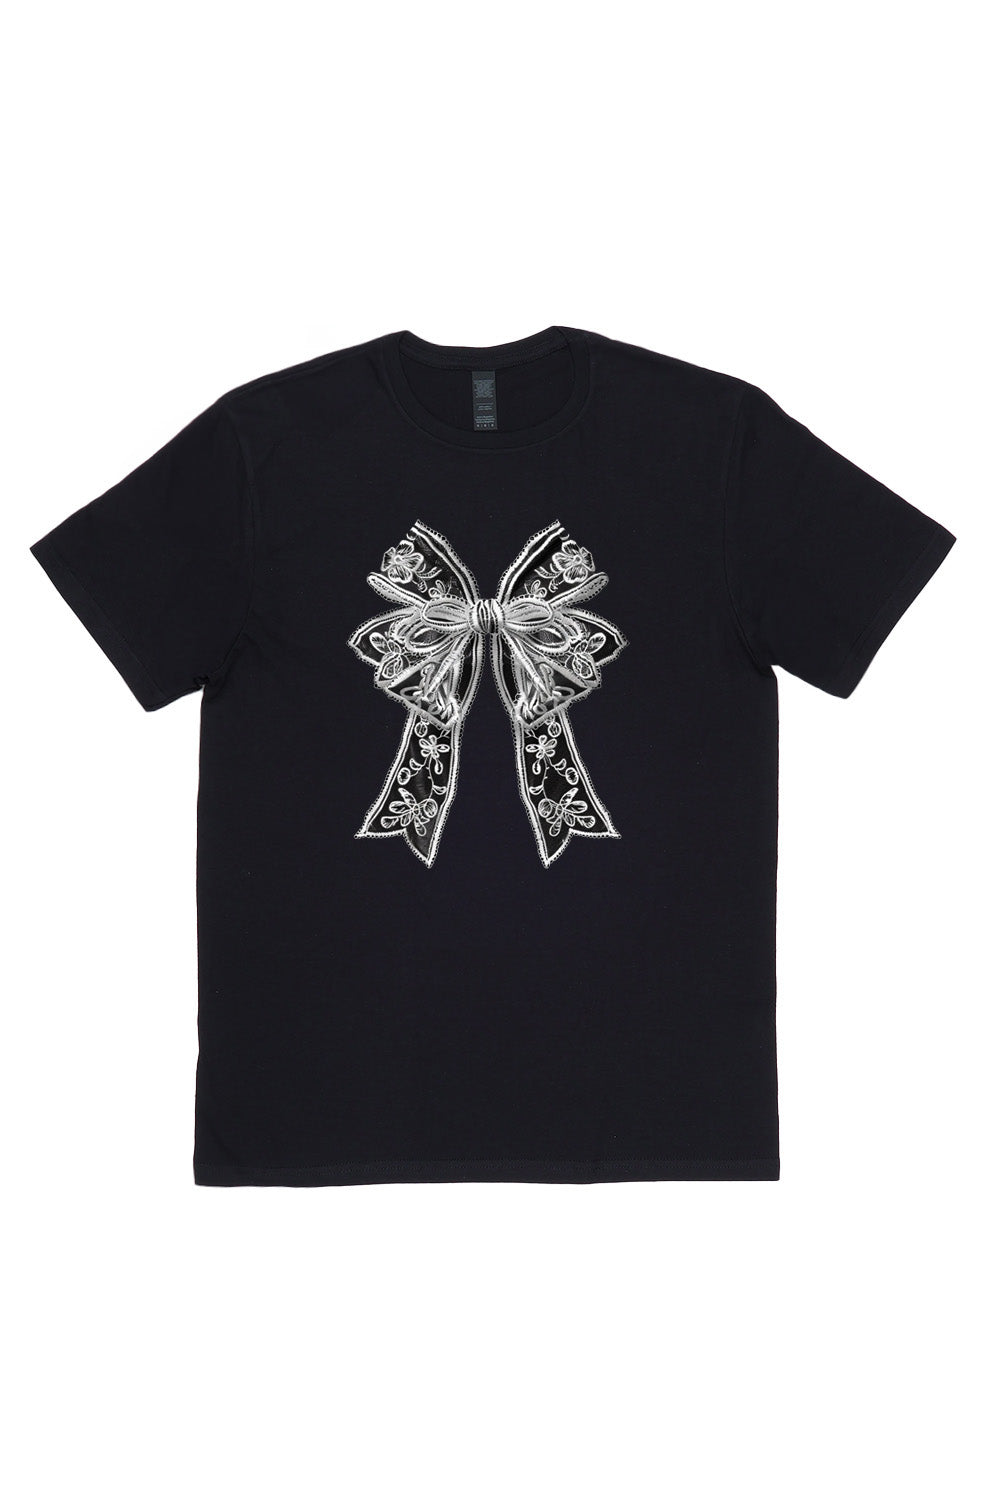 White Lace Bow T-Shirt in Black (Custom Packs)